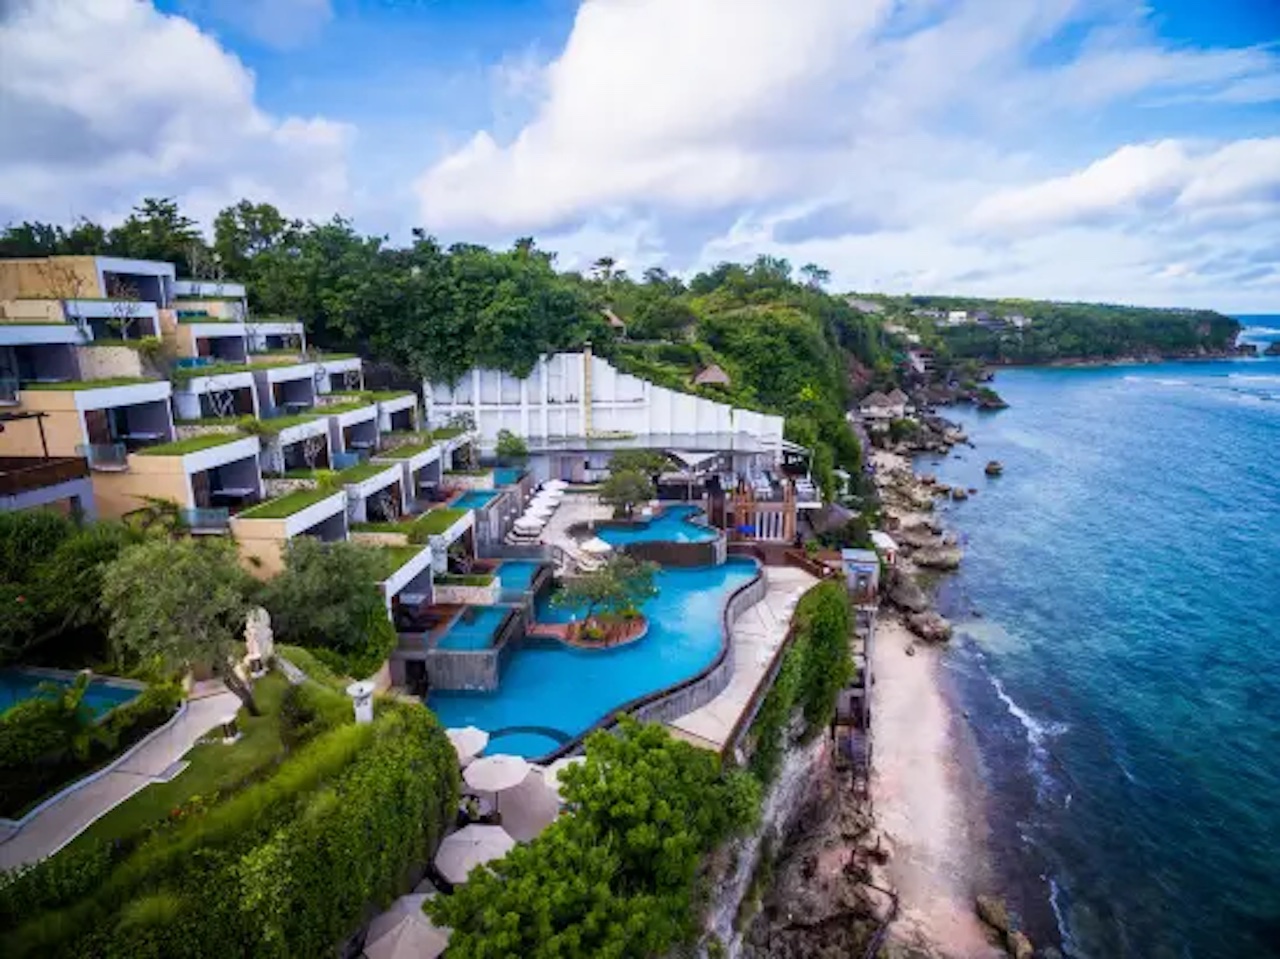 Anantara Uluwatu Bali Resort is one of the island’s Grande Dame retreats, with elegant, private suites and epic sunset vistas.